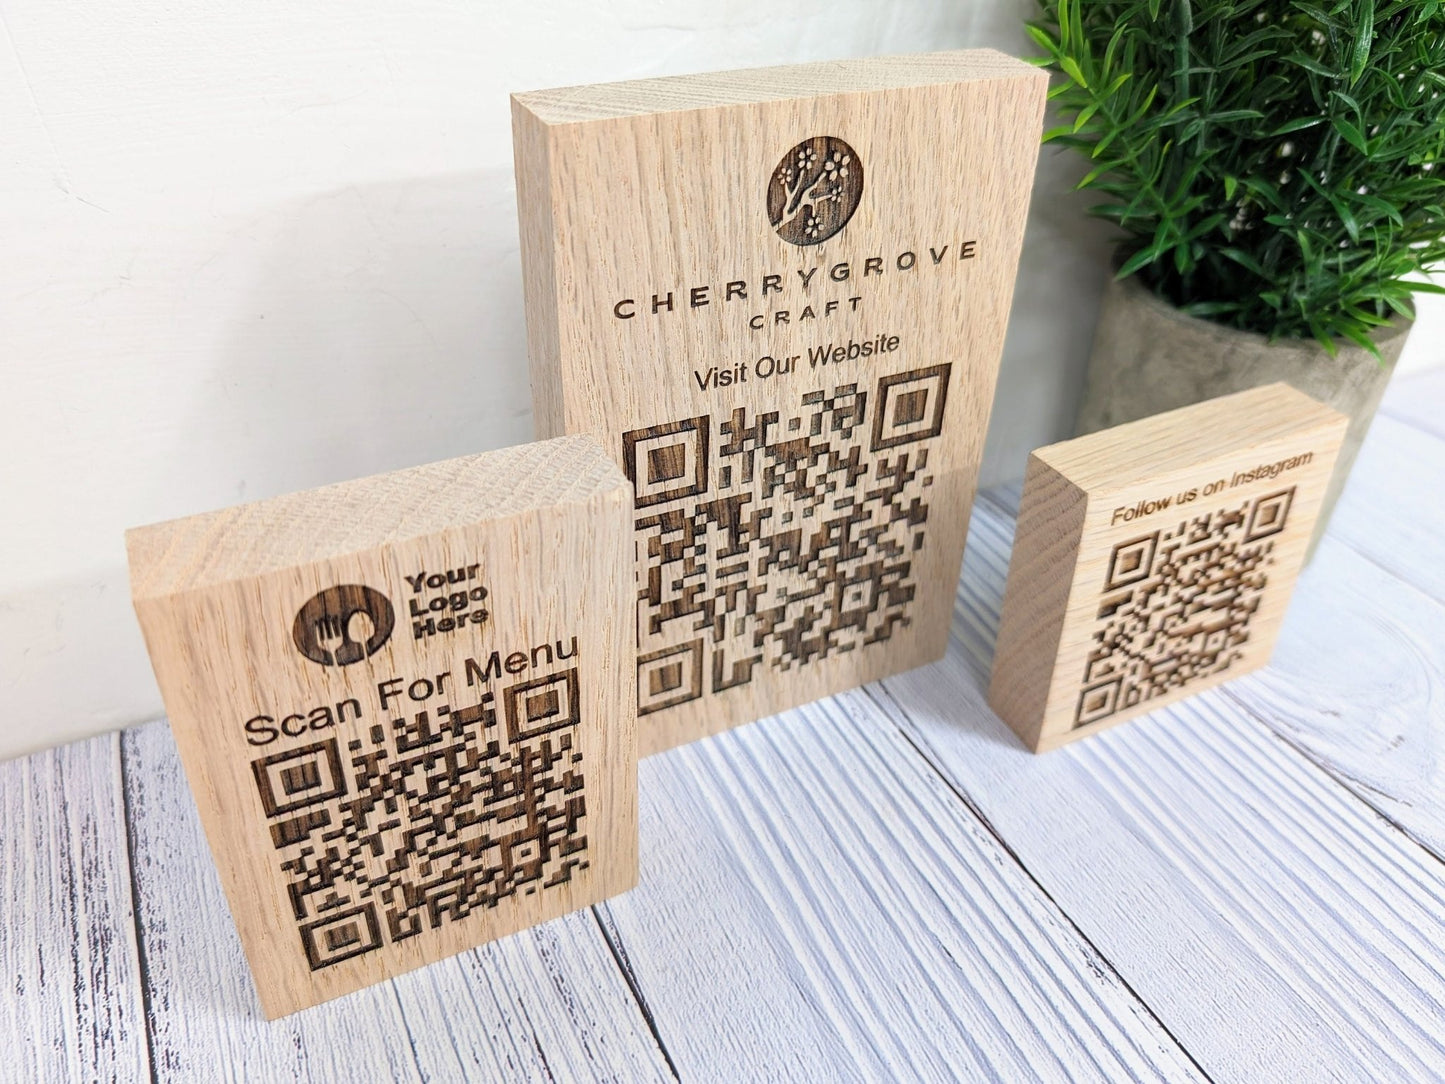 Custom QR Code Oak Blocks - Ideal for Menus, Websites, Social Media - 3 Sizes - CherryGroveCraft